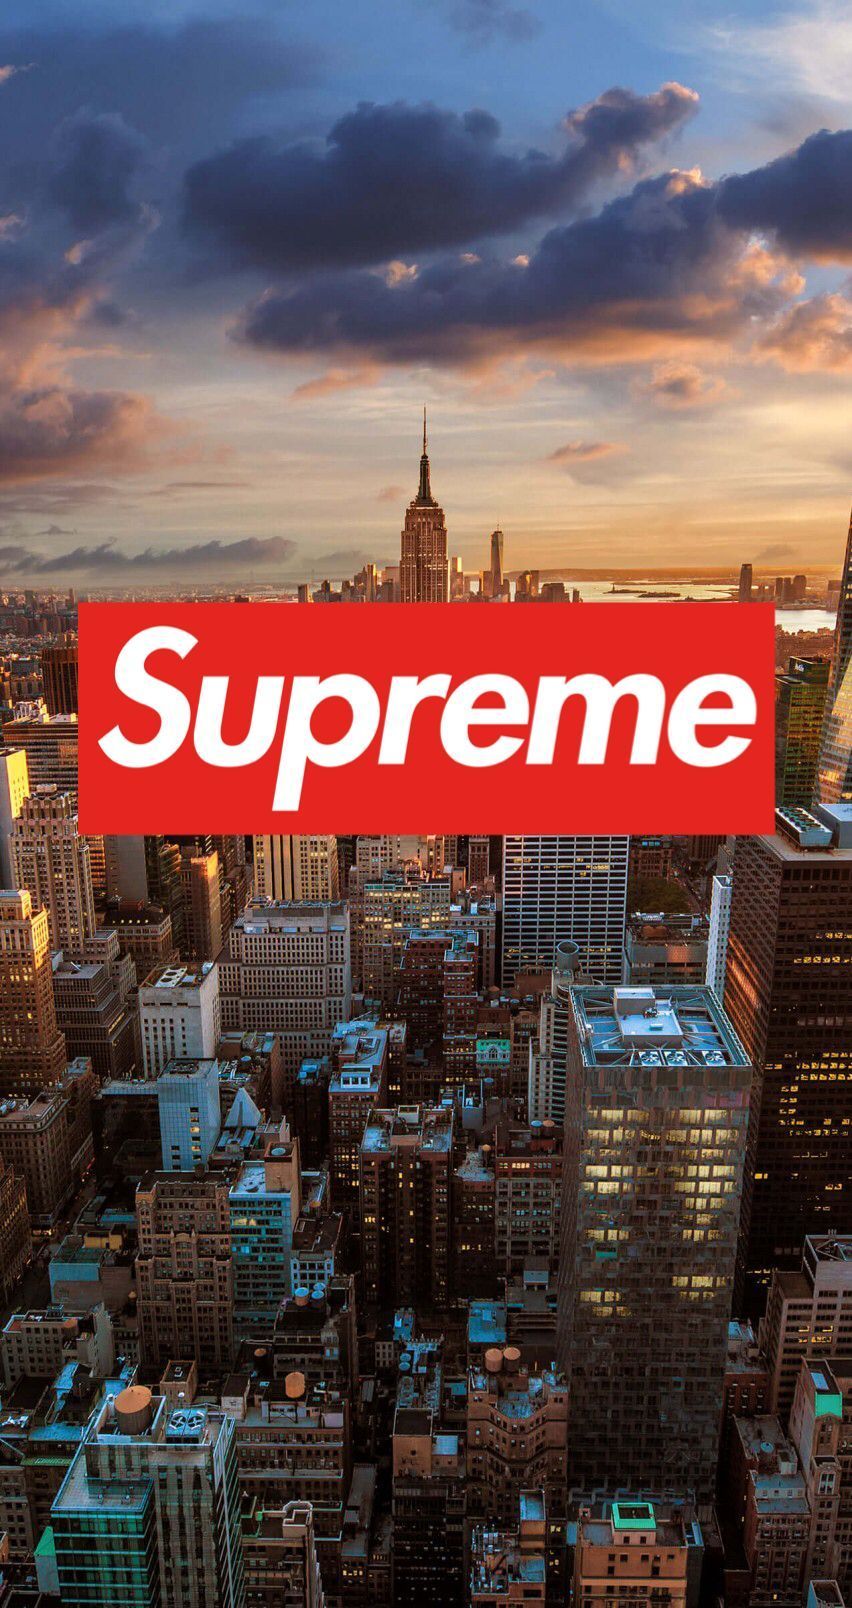 Supreme New York Iphone Wallpapers On Wallpaperdog